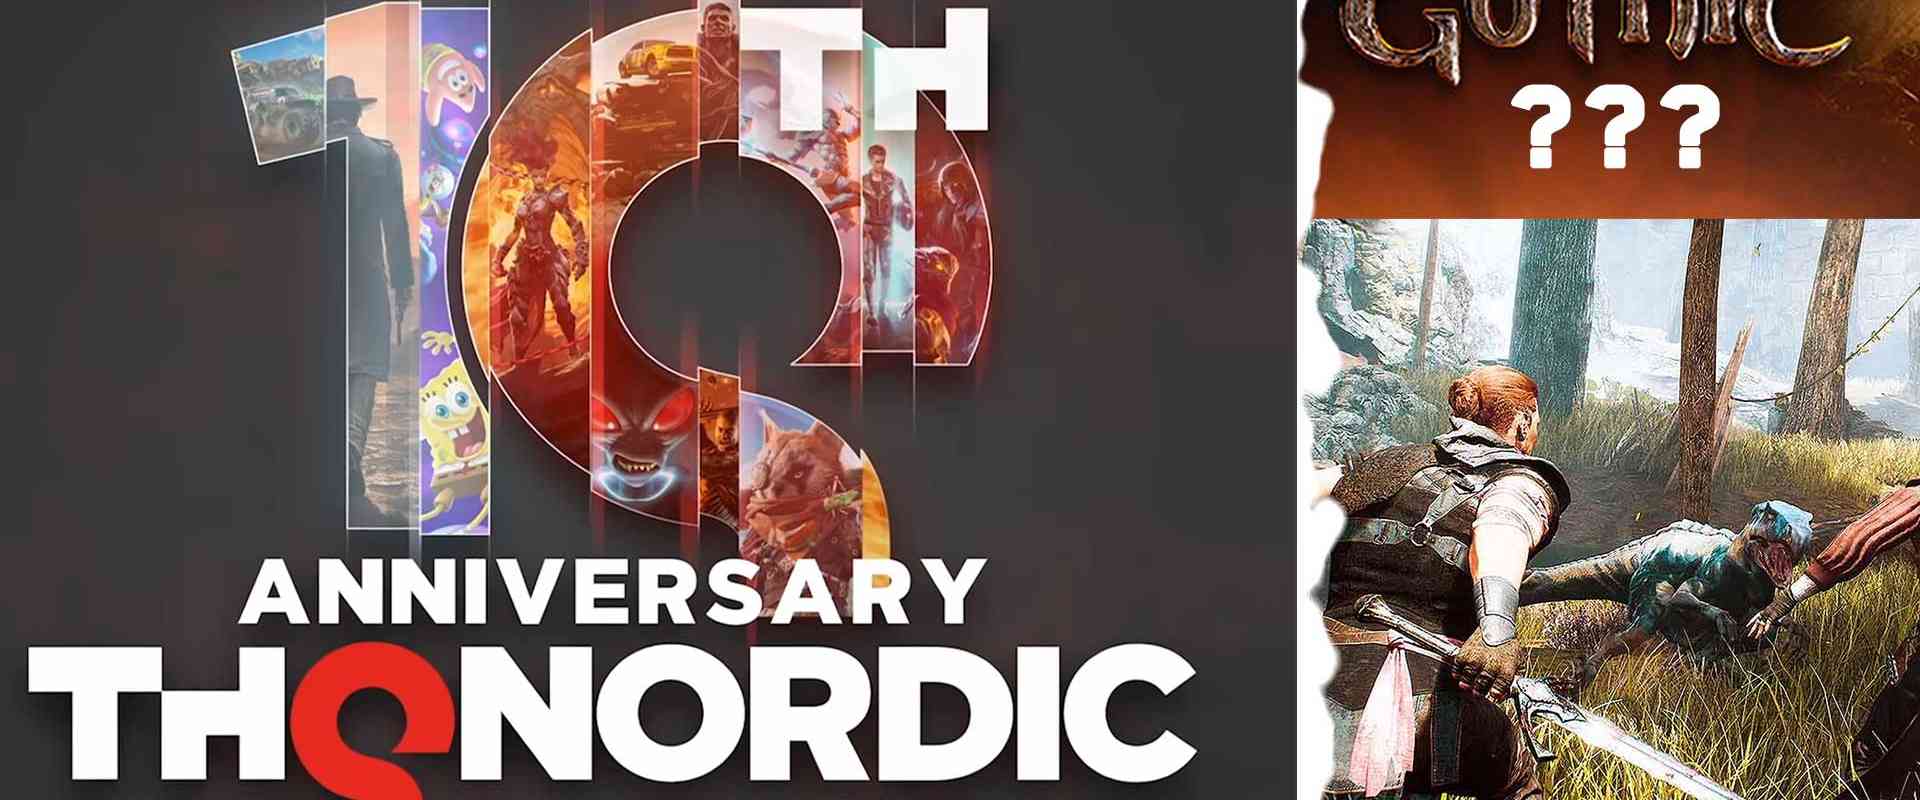 thq nordic anniversary showcase gothic